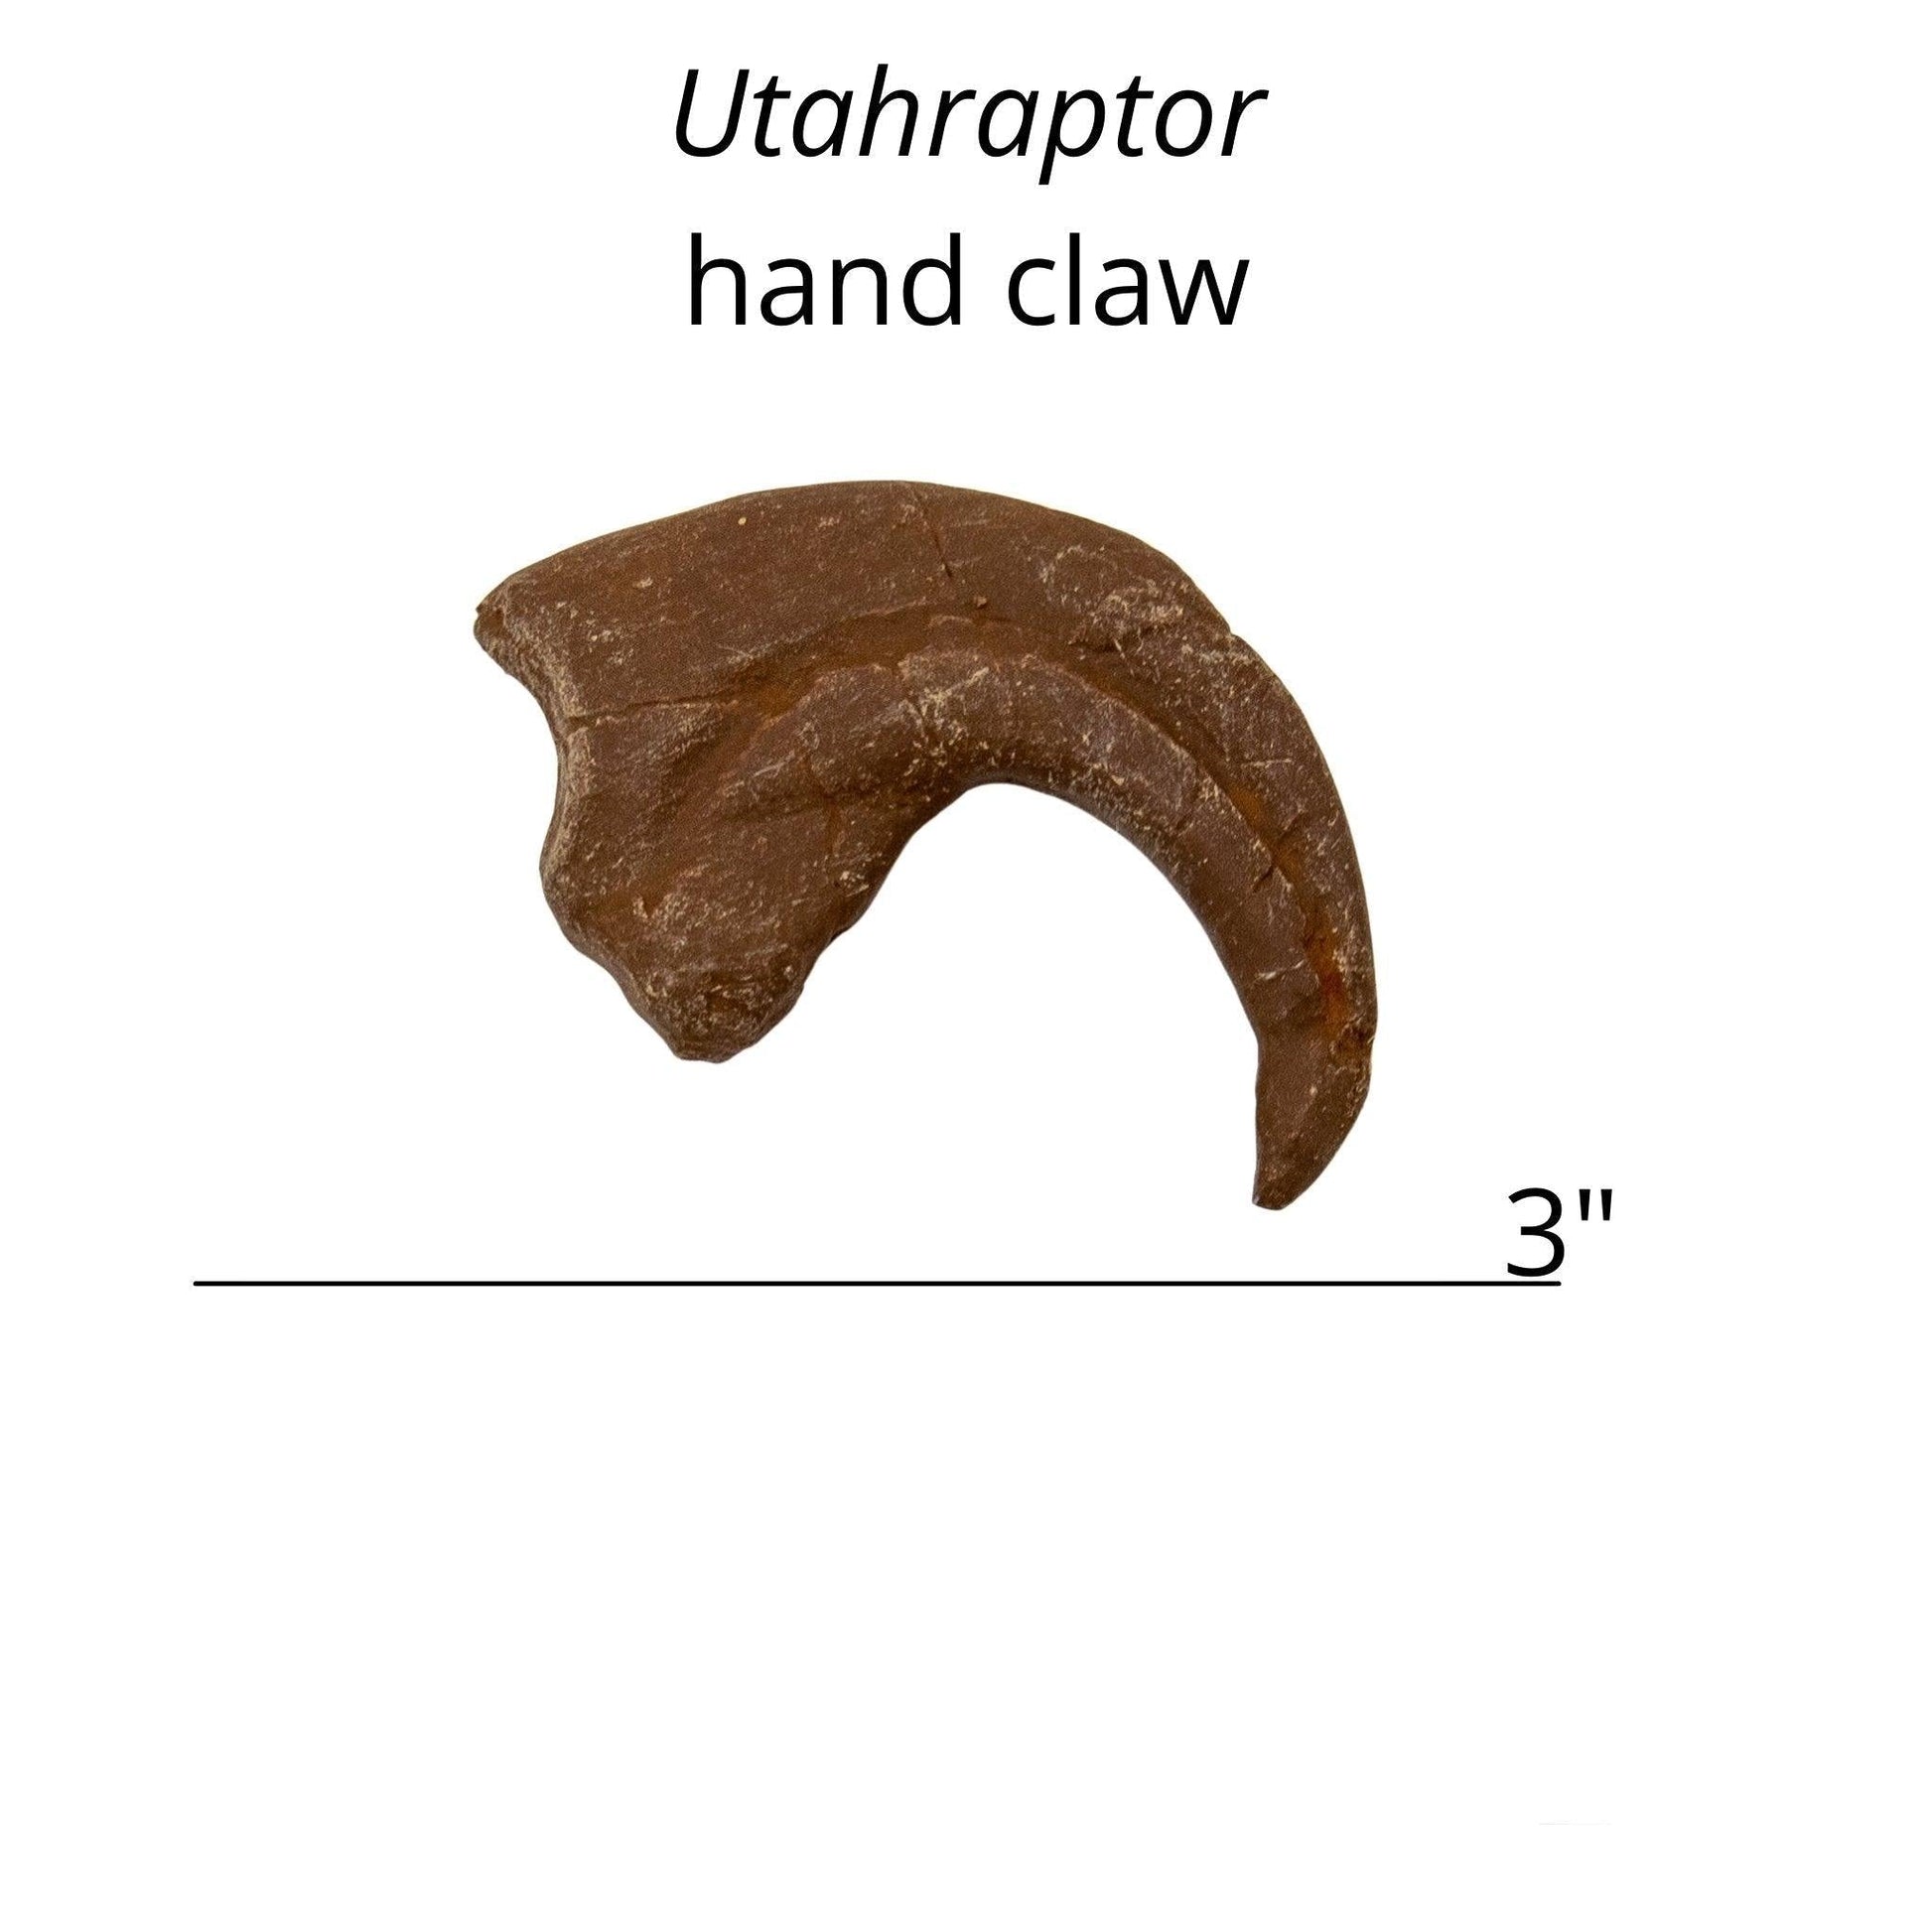 Utahraptor hand claw cast